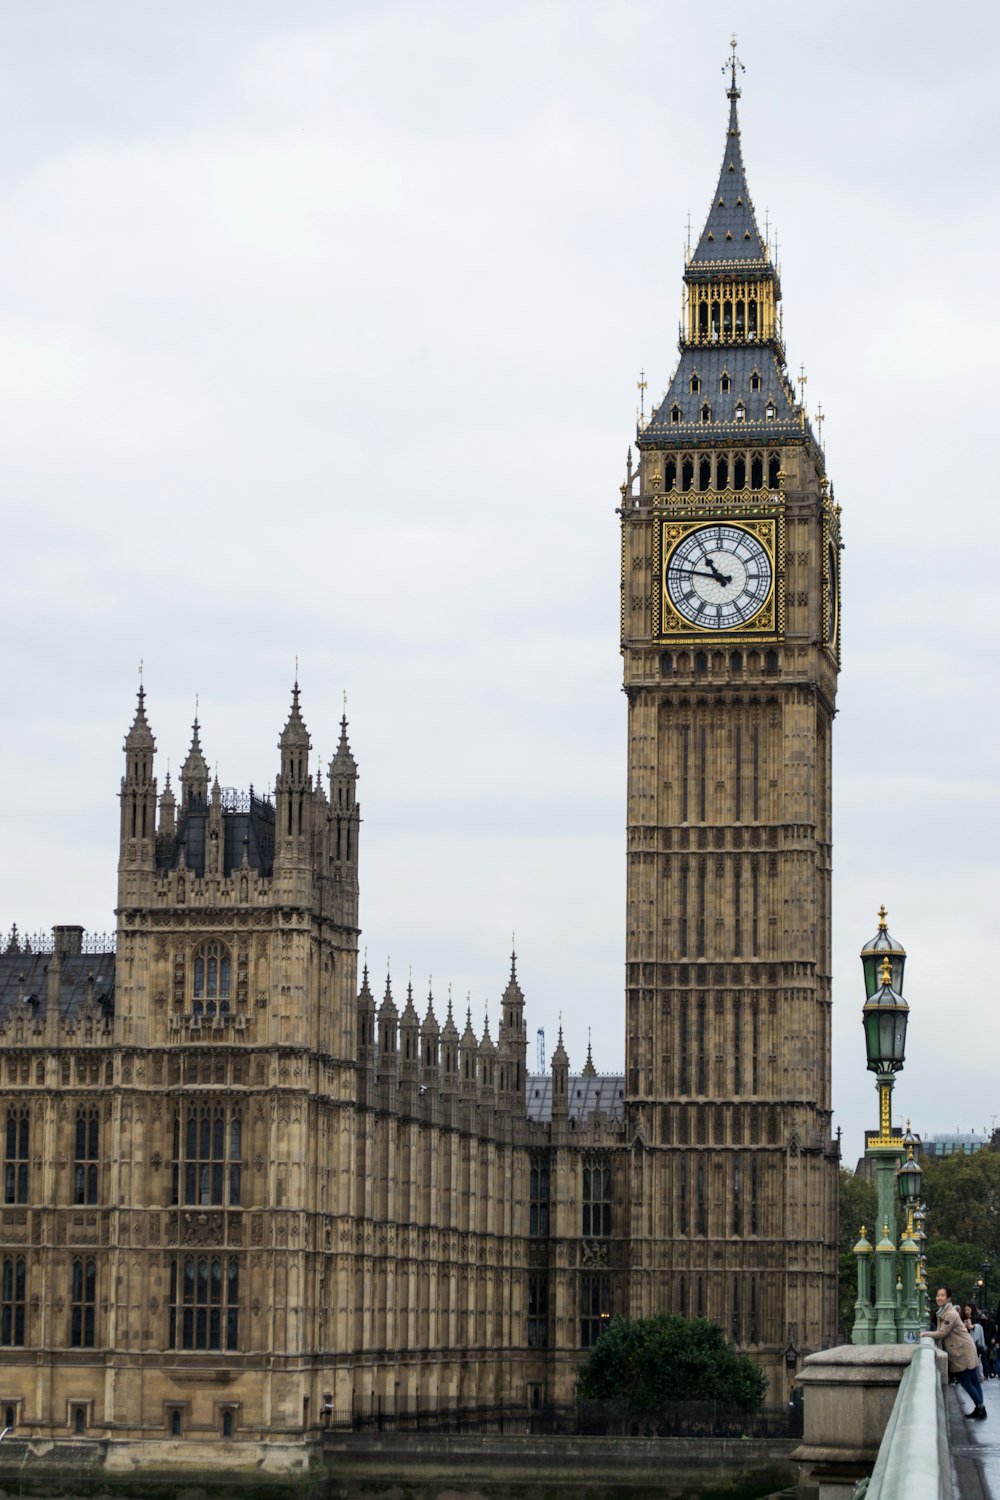 500+ Beautiful Big Ben Pictures - London | Download Free Images on Unsplash